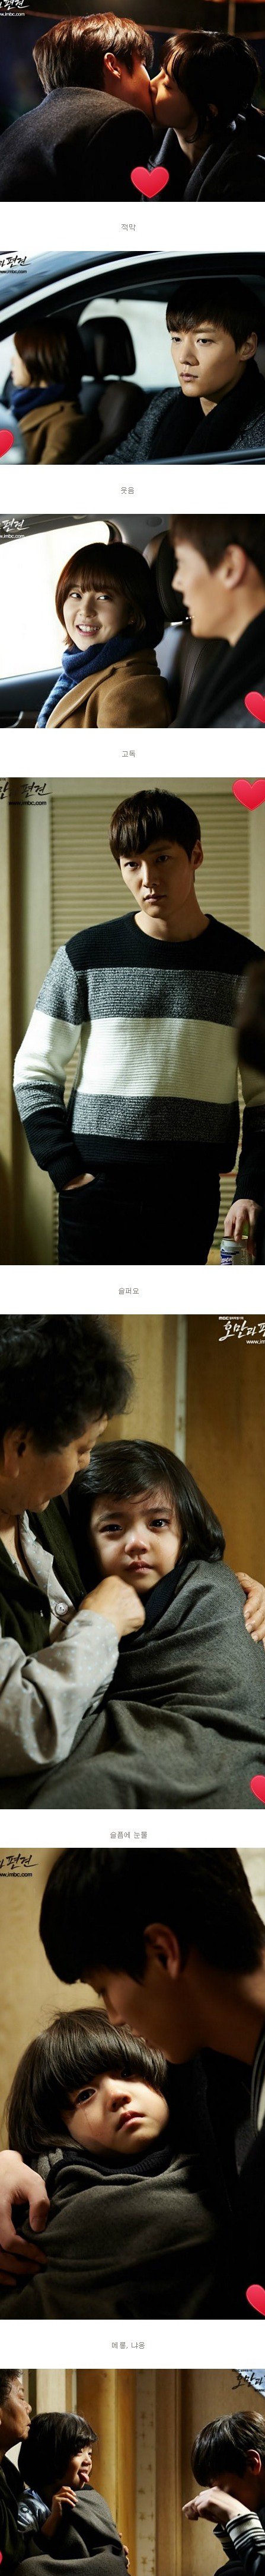 episode 1 captures for the Korean drama 'Healer'